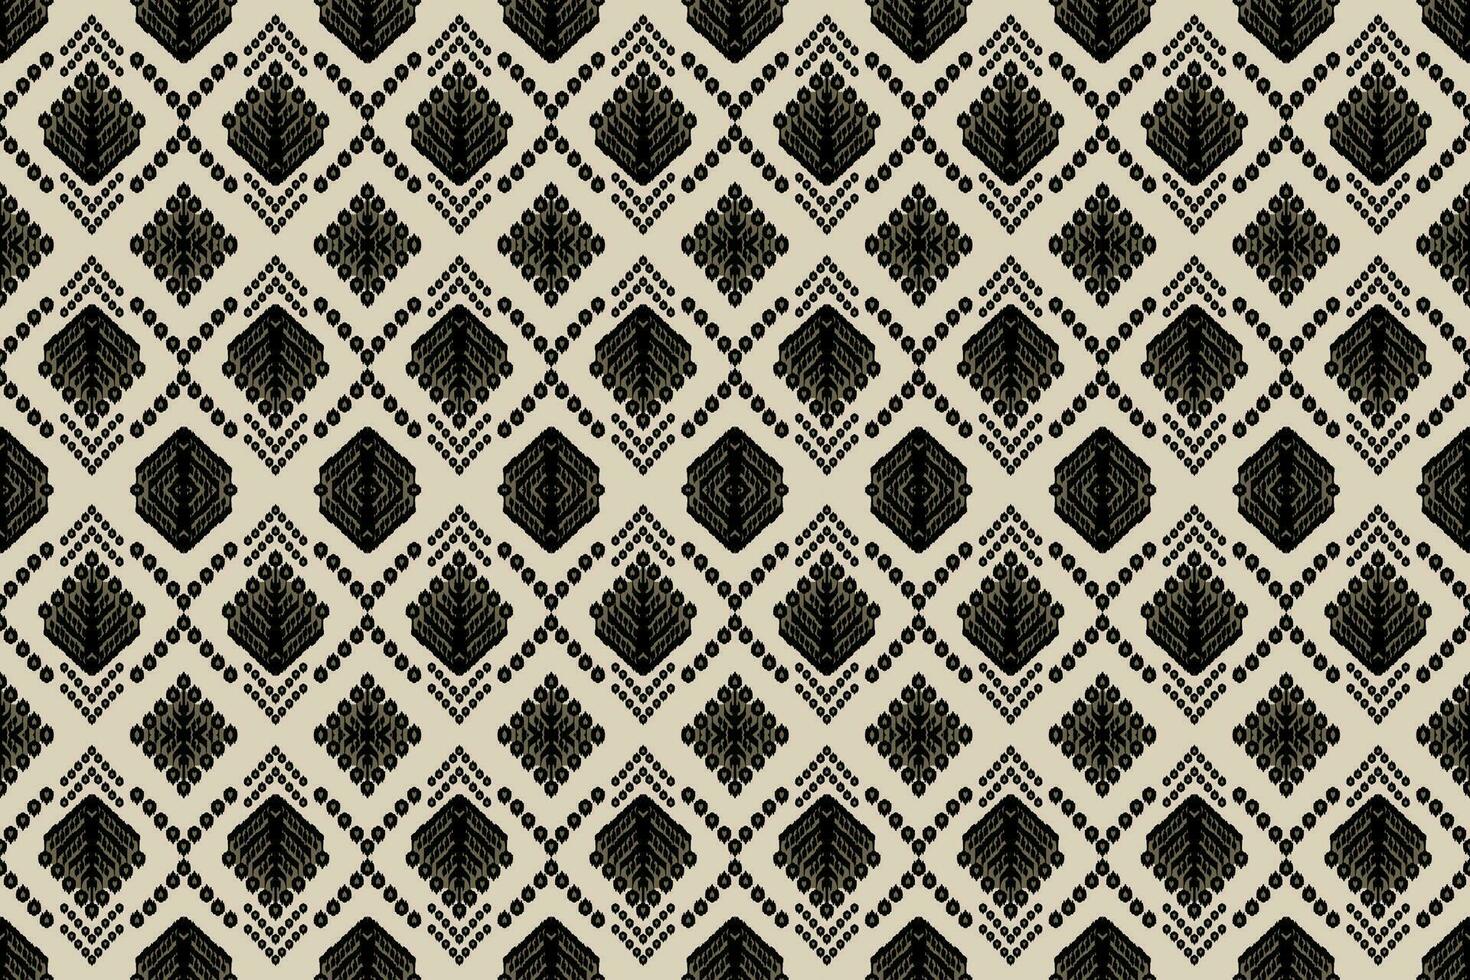 Ikat tribal Indian seamless pattern. Ethnic Aztec fabric carpet mandala ornament native boho chevron textile.Geometric African American oriental tranditional vector illustrations. Embroidery style